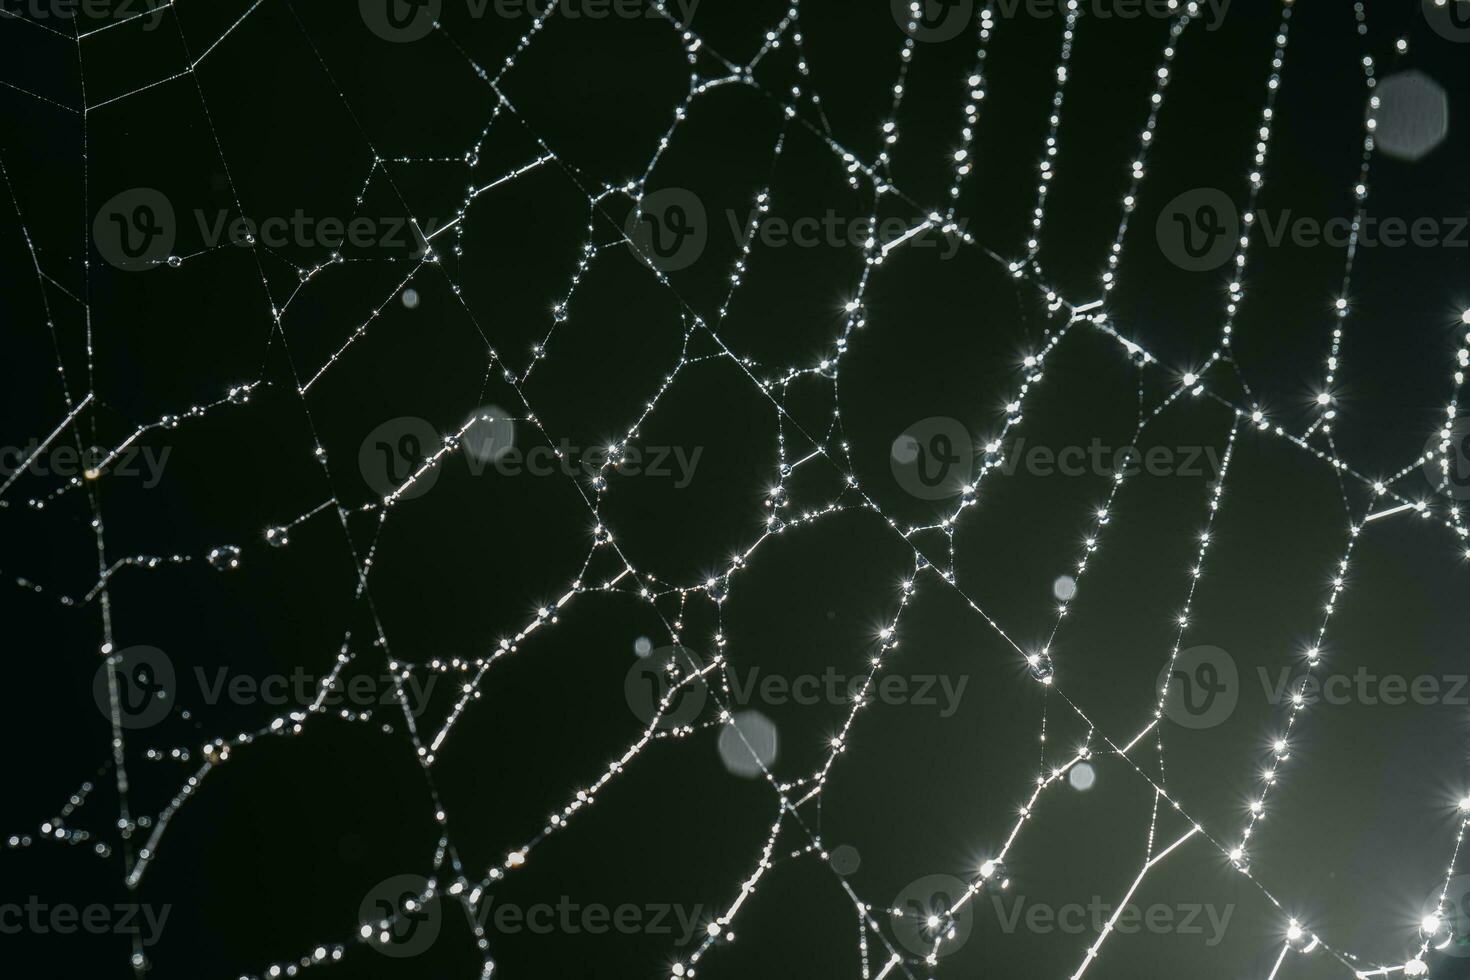 spinnenwebben met druppels na de ochtend- regen. foto